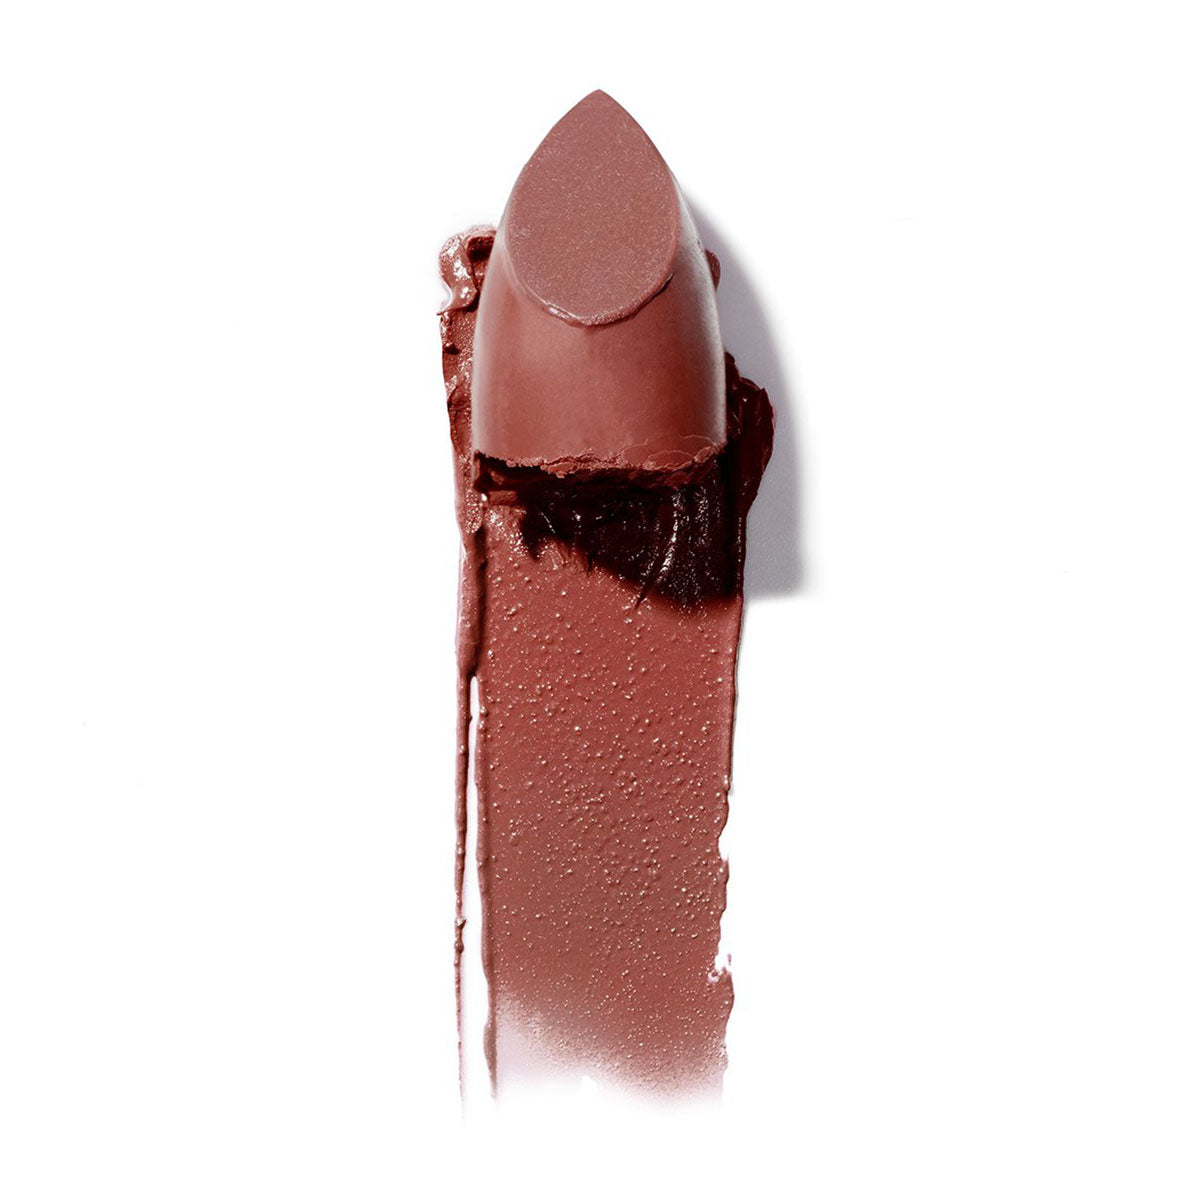 Alternate image of Color Block Lipstick in Marsala